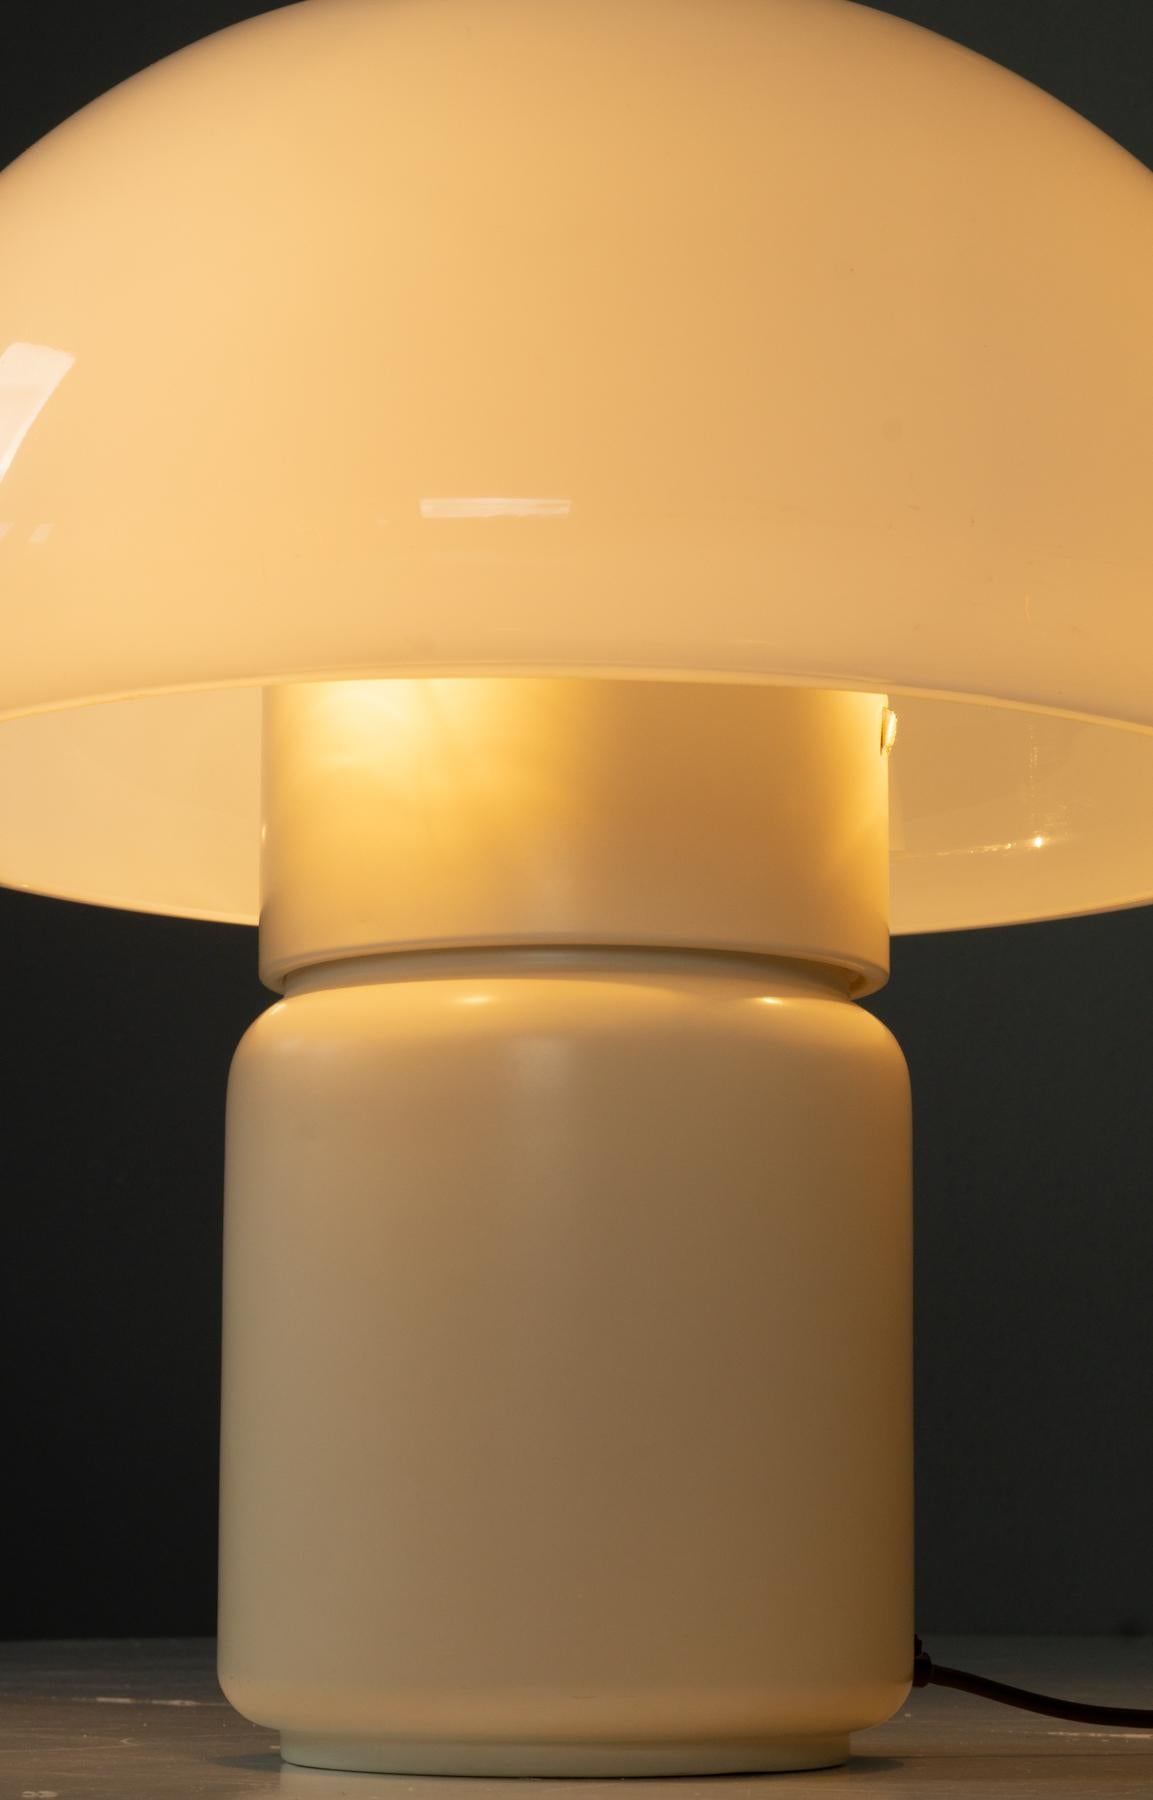 Molded Elio Martinelli for Martinelli Luce Model 625, Large Space Age Mushroom Lamp